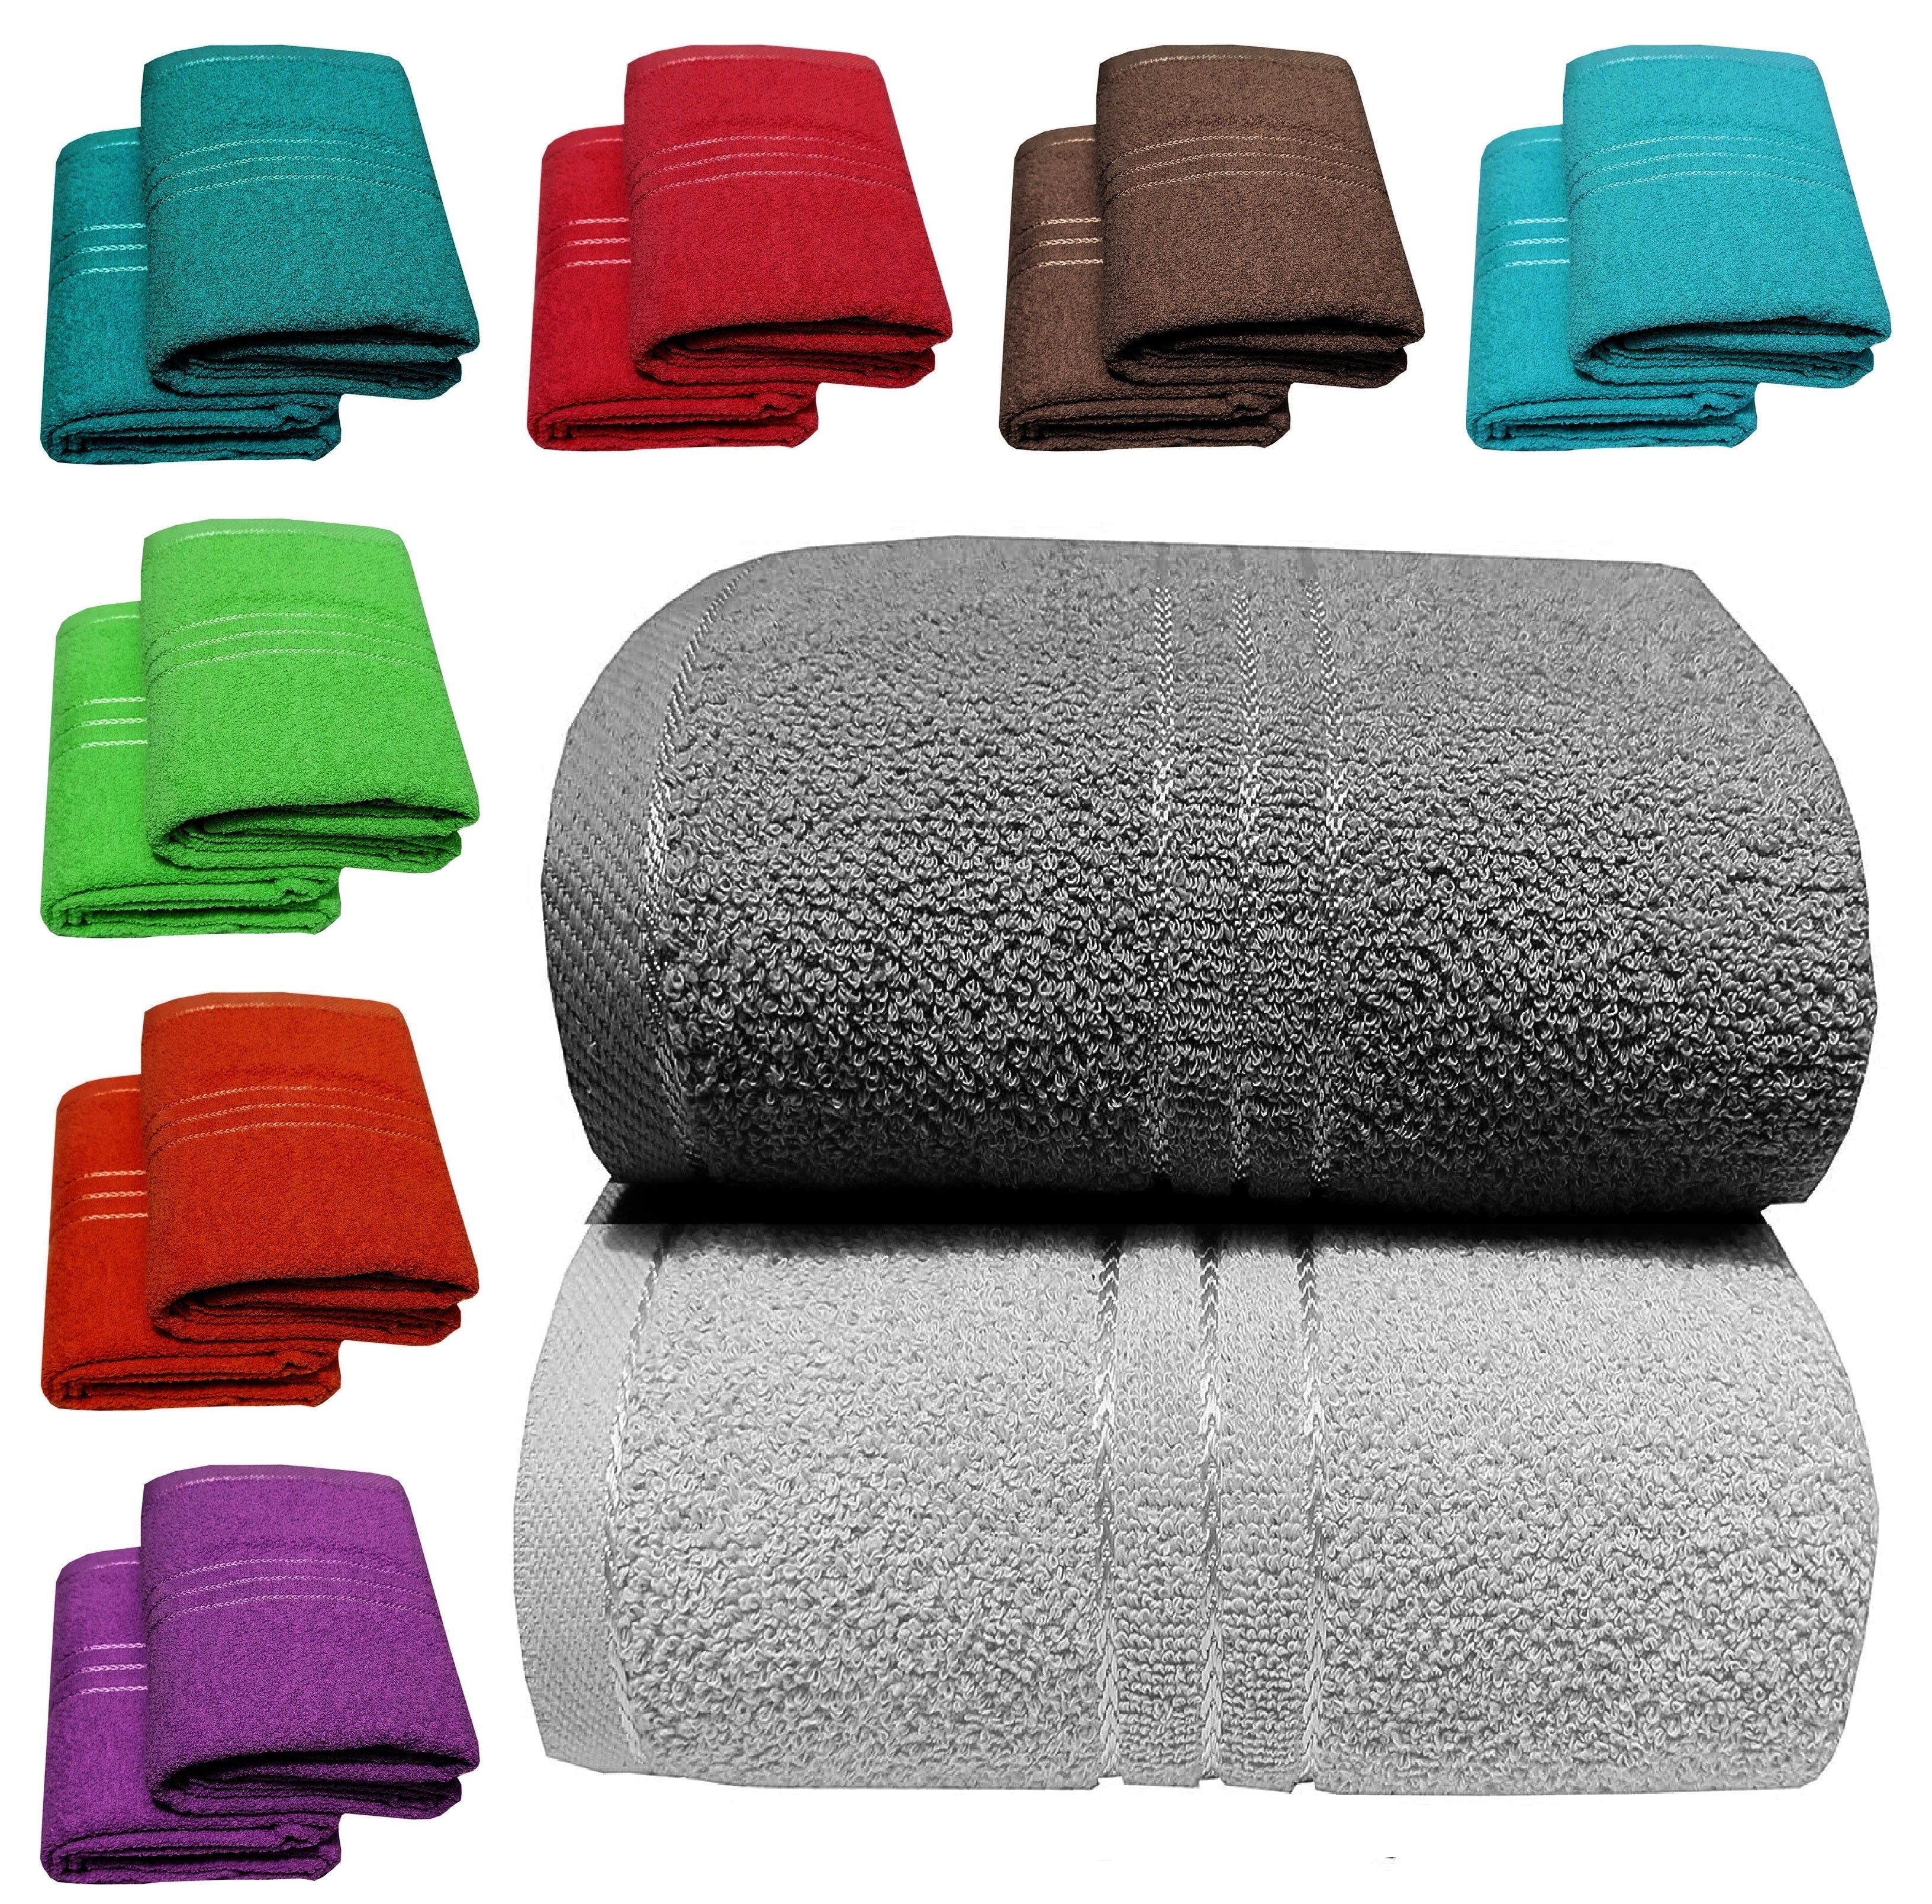 2x Large Super Jumbo Bath Sheets 100% Premium Egyptian Cotton Big Bathroom Bath Sheets